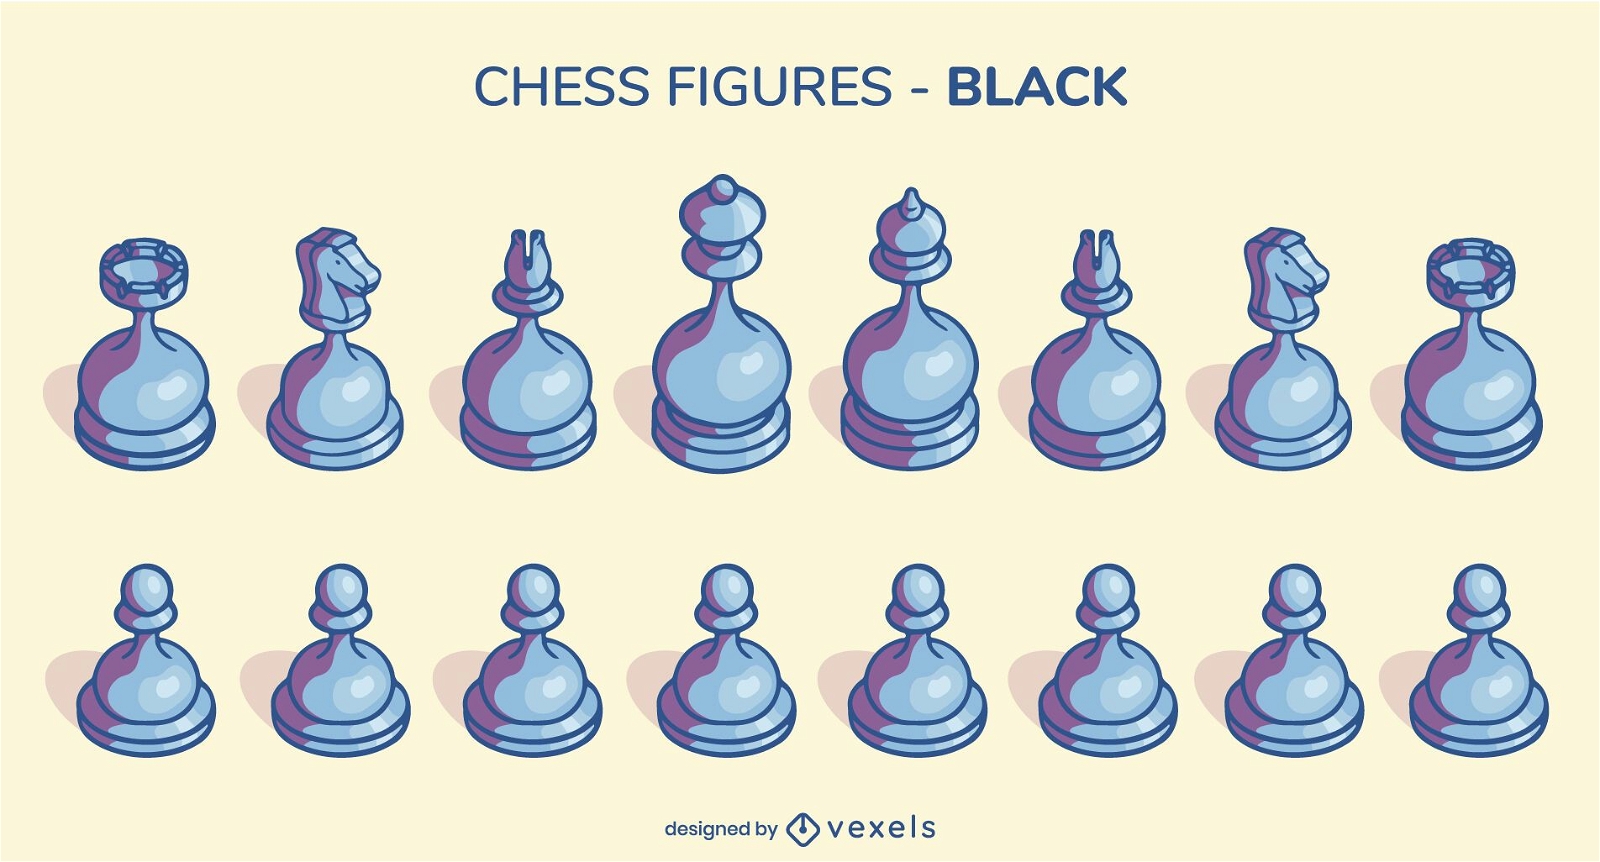 Conjunto de ilustraci?n de figuras de ajedrez redondeadas oscuras